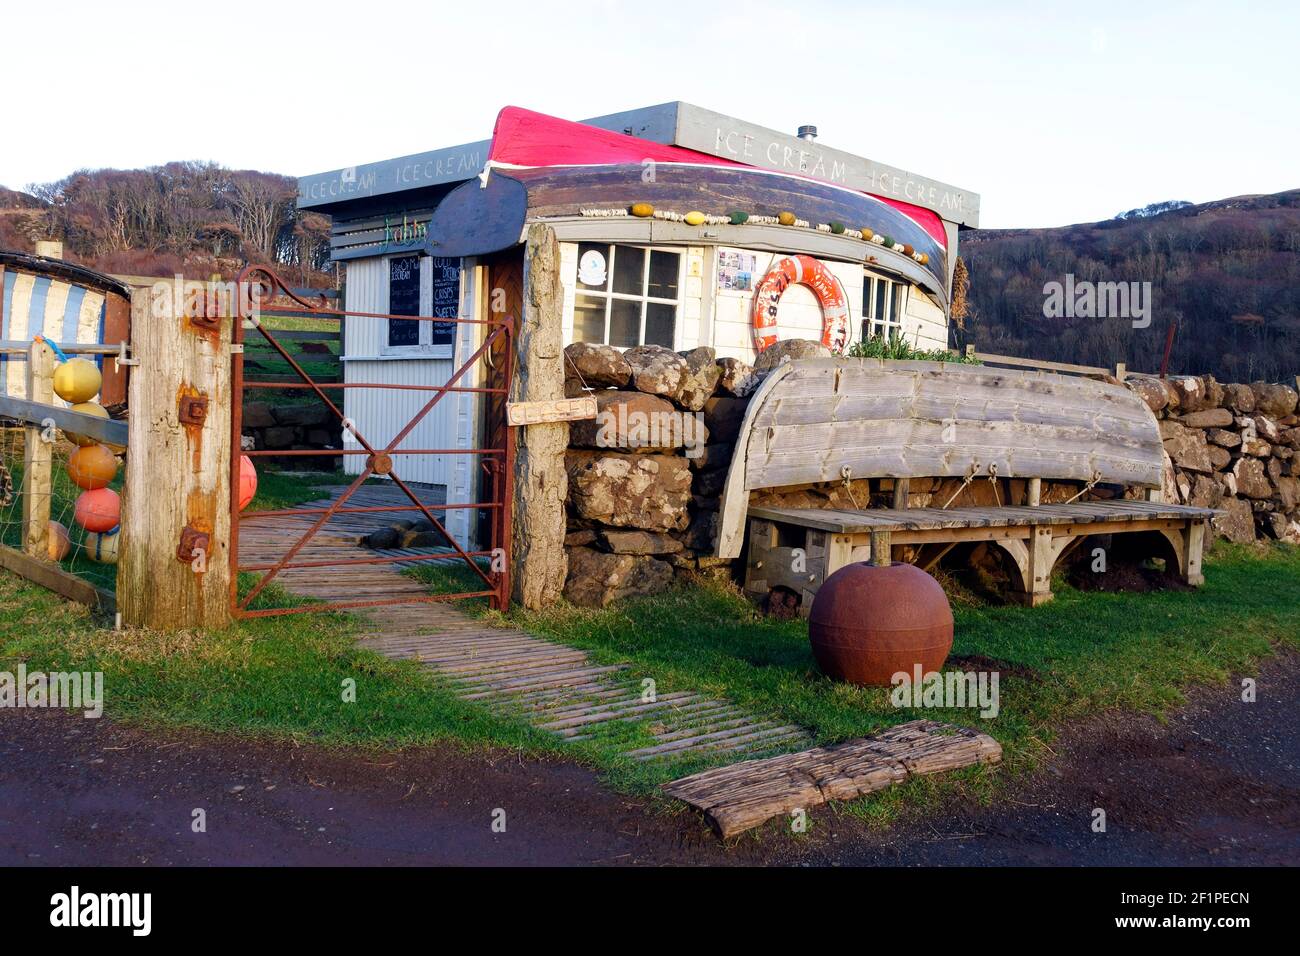 Ice Cream shack with boat roof at Calgary Bay, Isle of Mull, Scotland Stock Photo